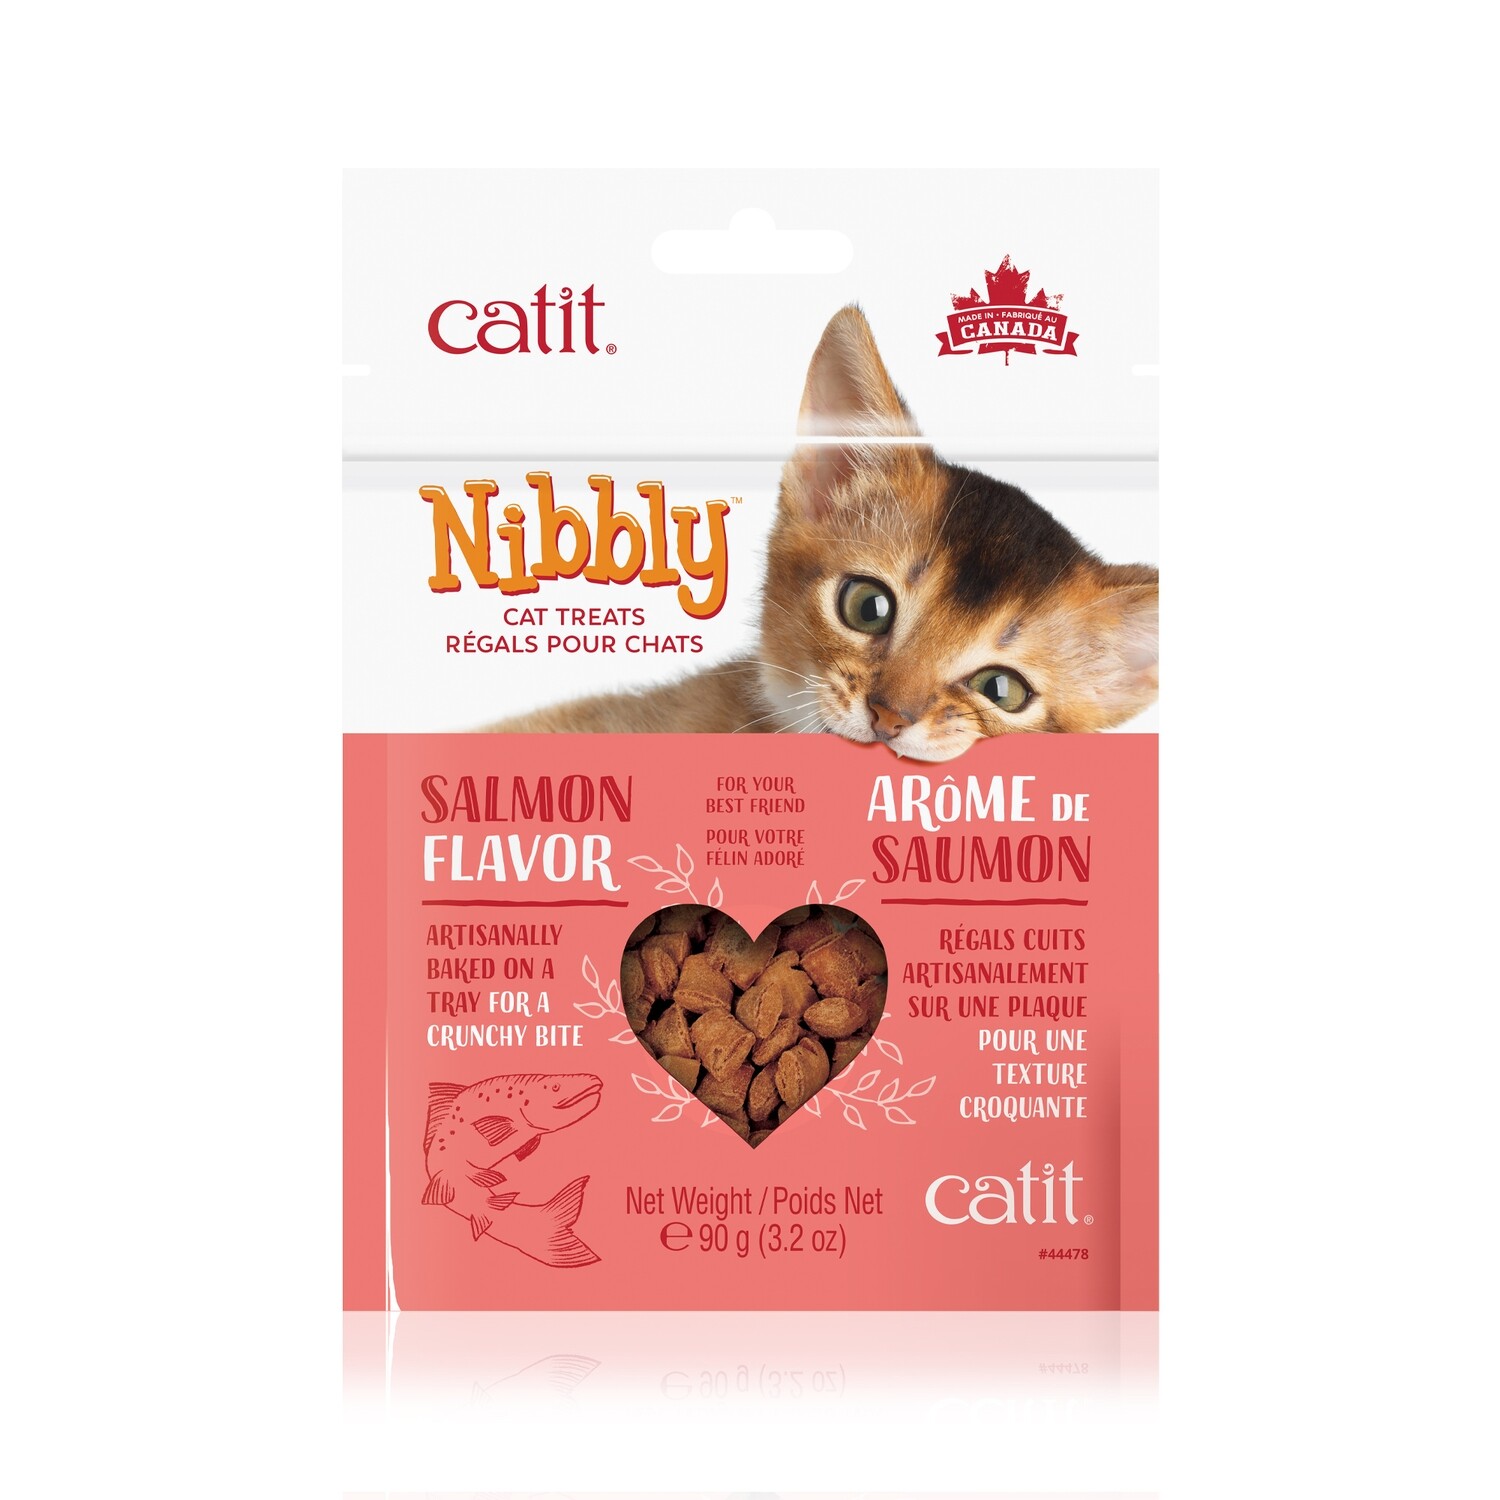 Catit Nibbly Cat Treats - Salmon Flavour 90g - 鲑鱼味夹心饼干